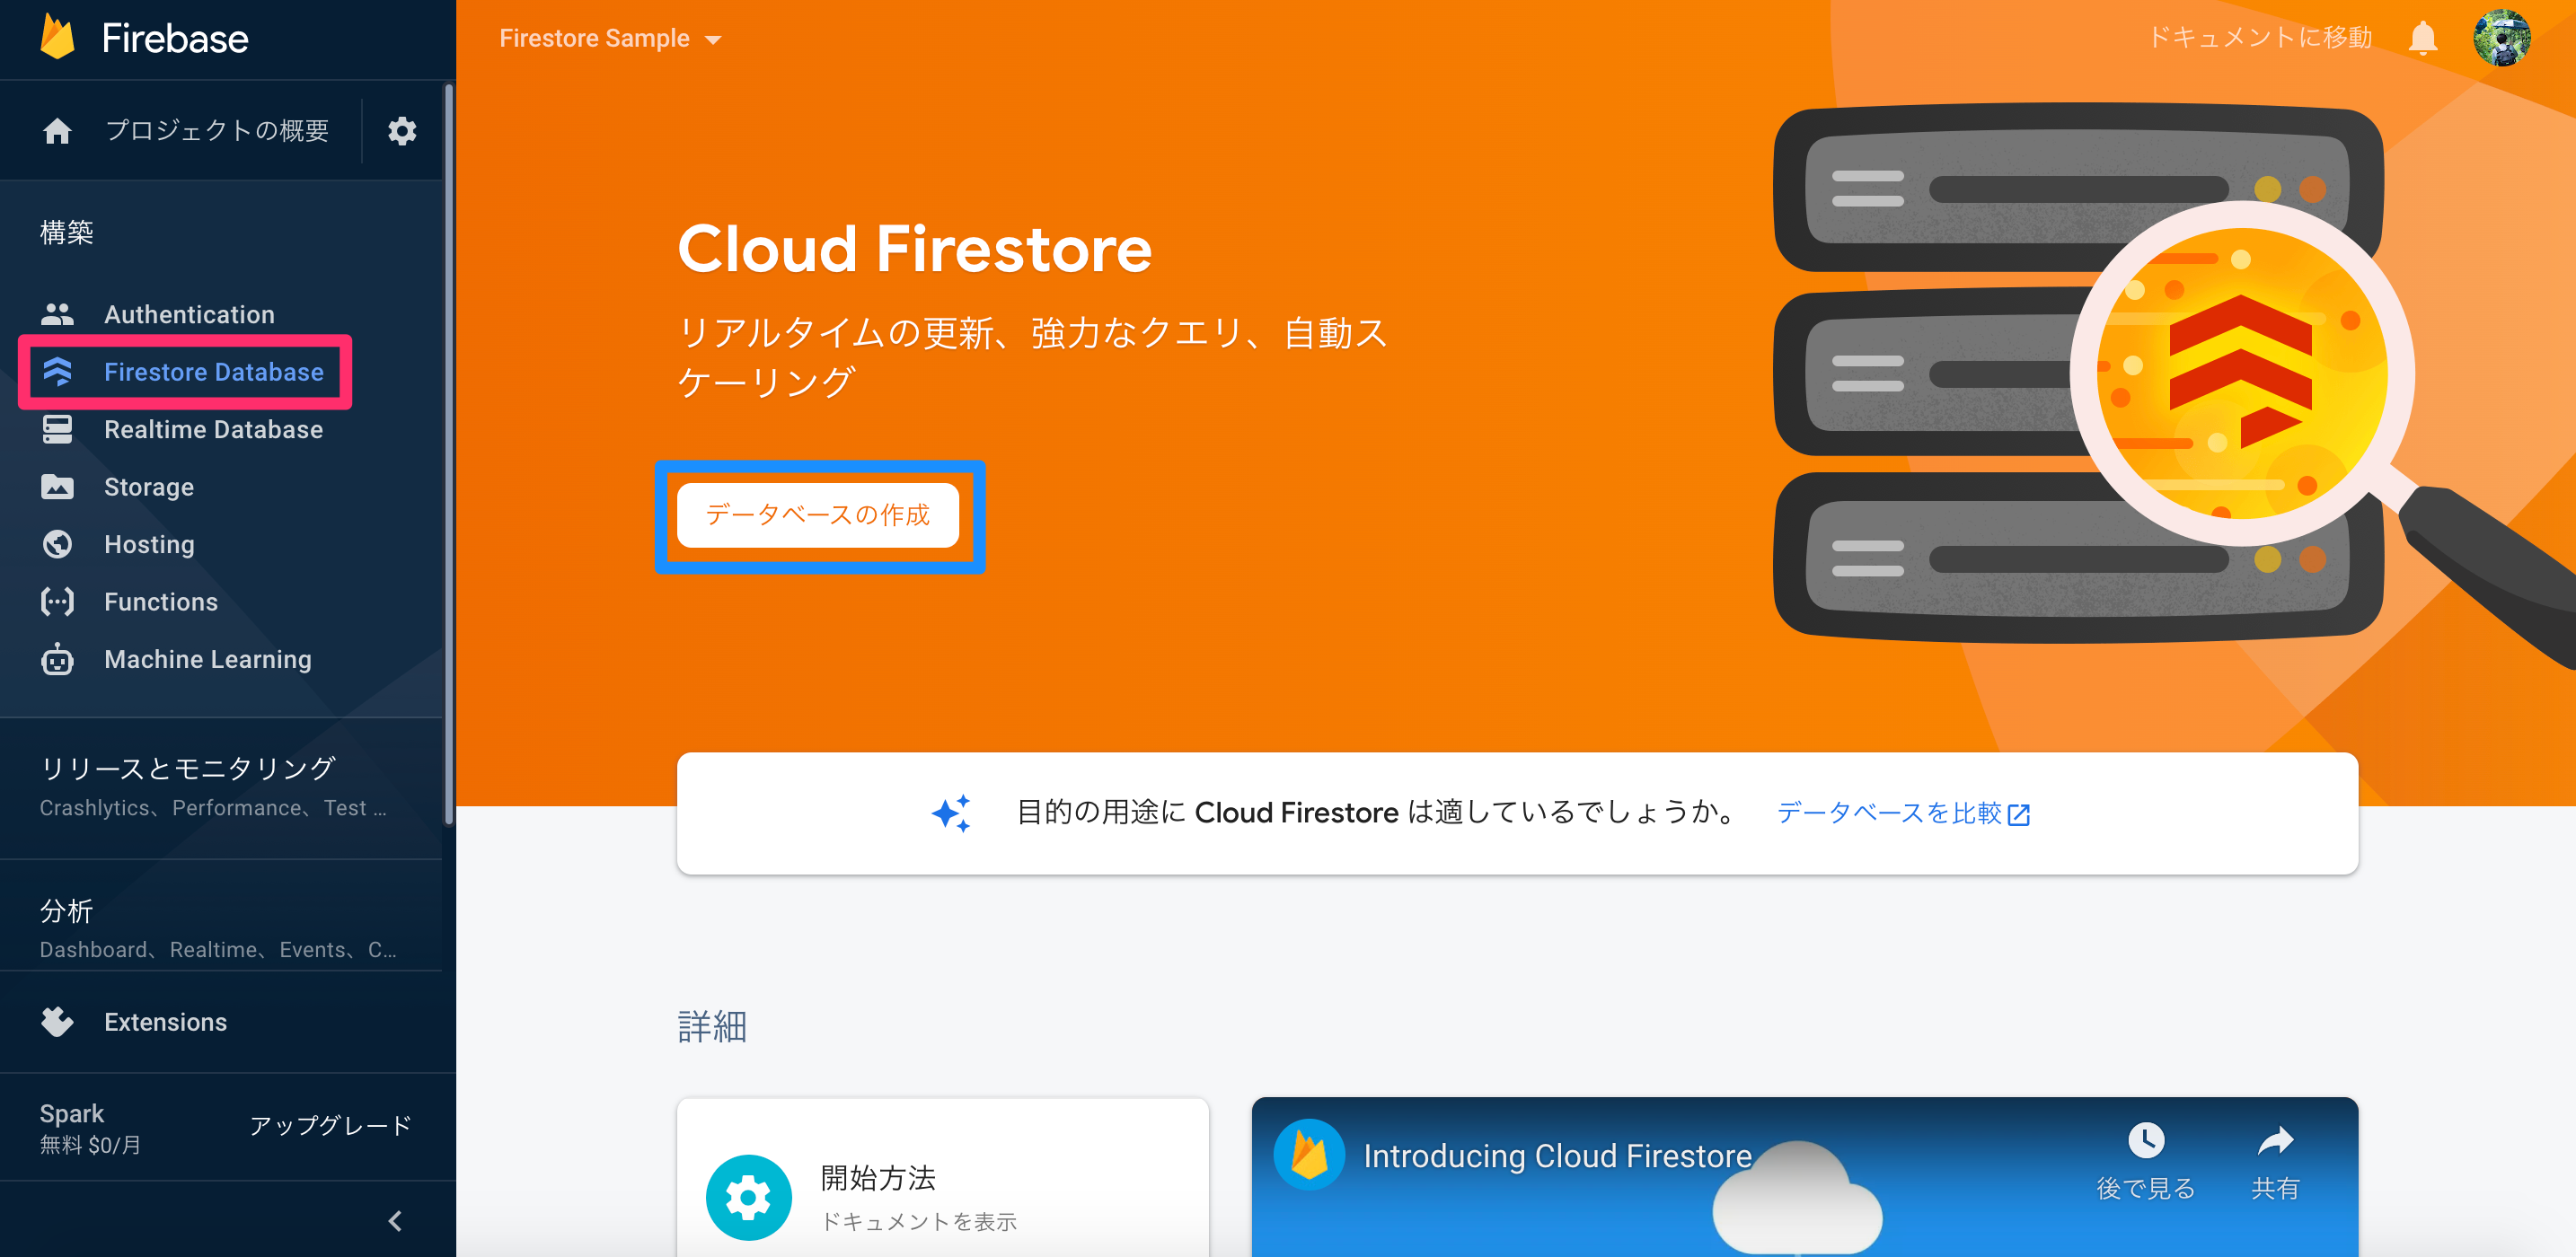 Firestore_Sample_-Cloud_Firestore-_Firebase_コンソール.png